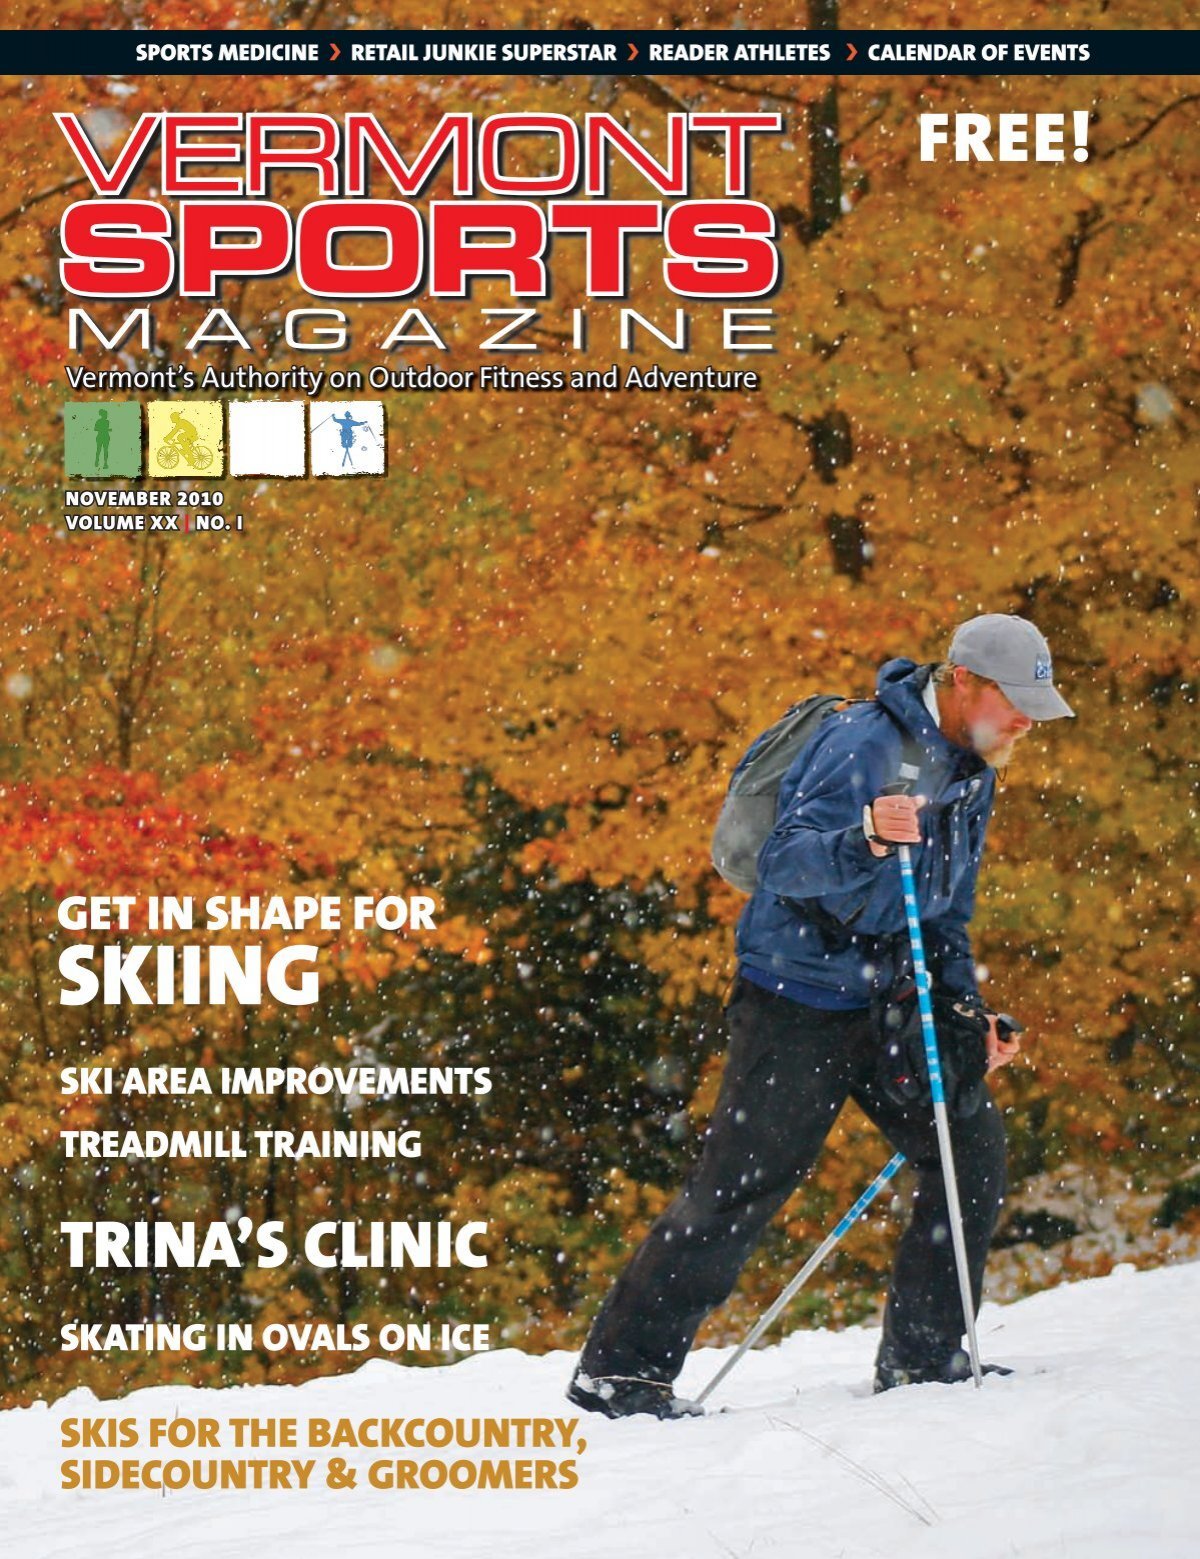 SPORTS MEDICINE I RETAIL JUNKIE - Vermont Sports Magazine